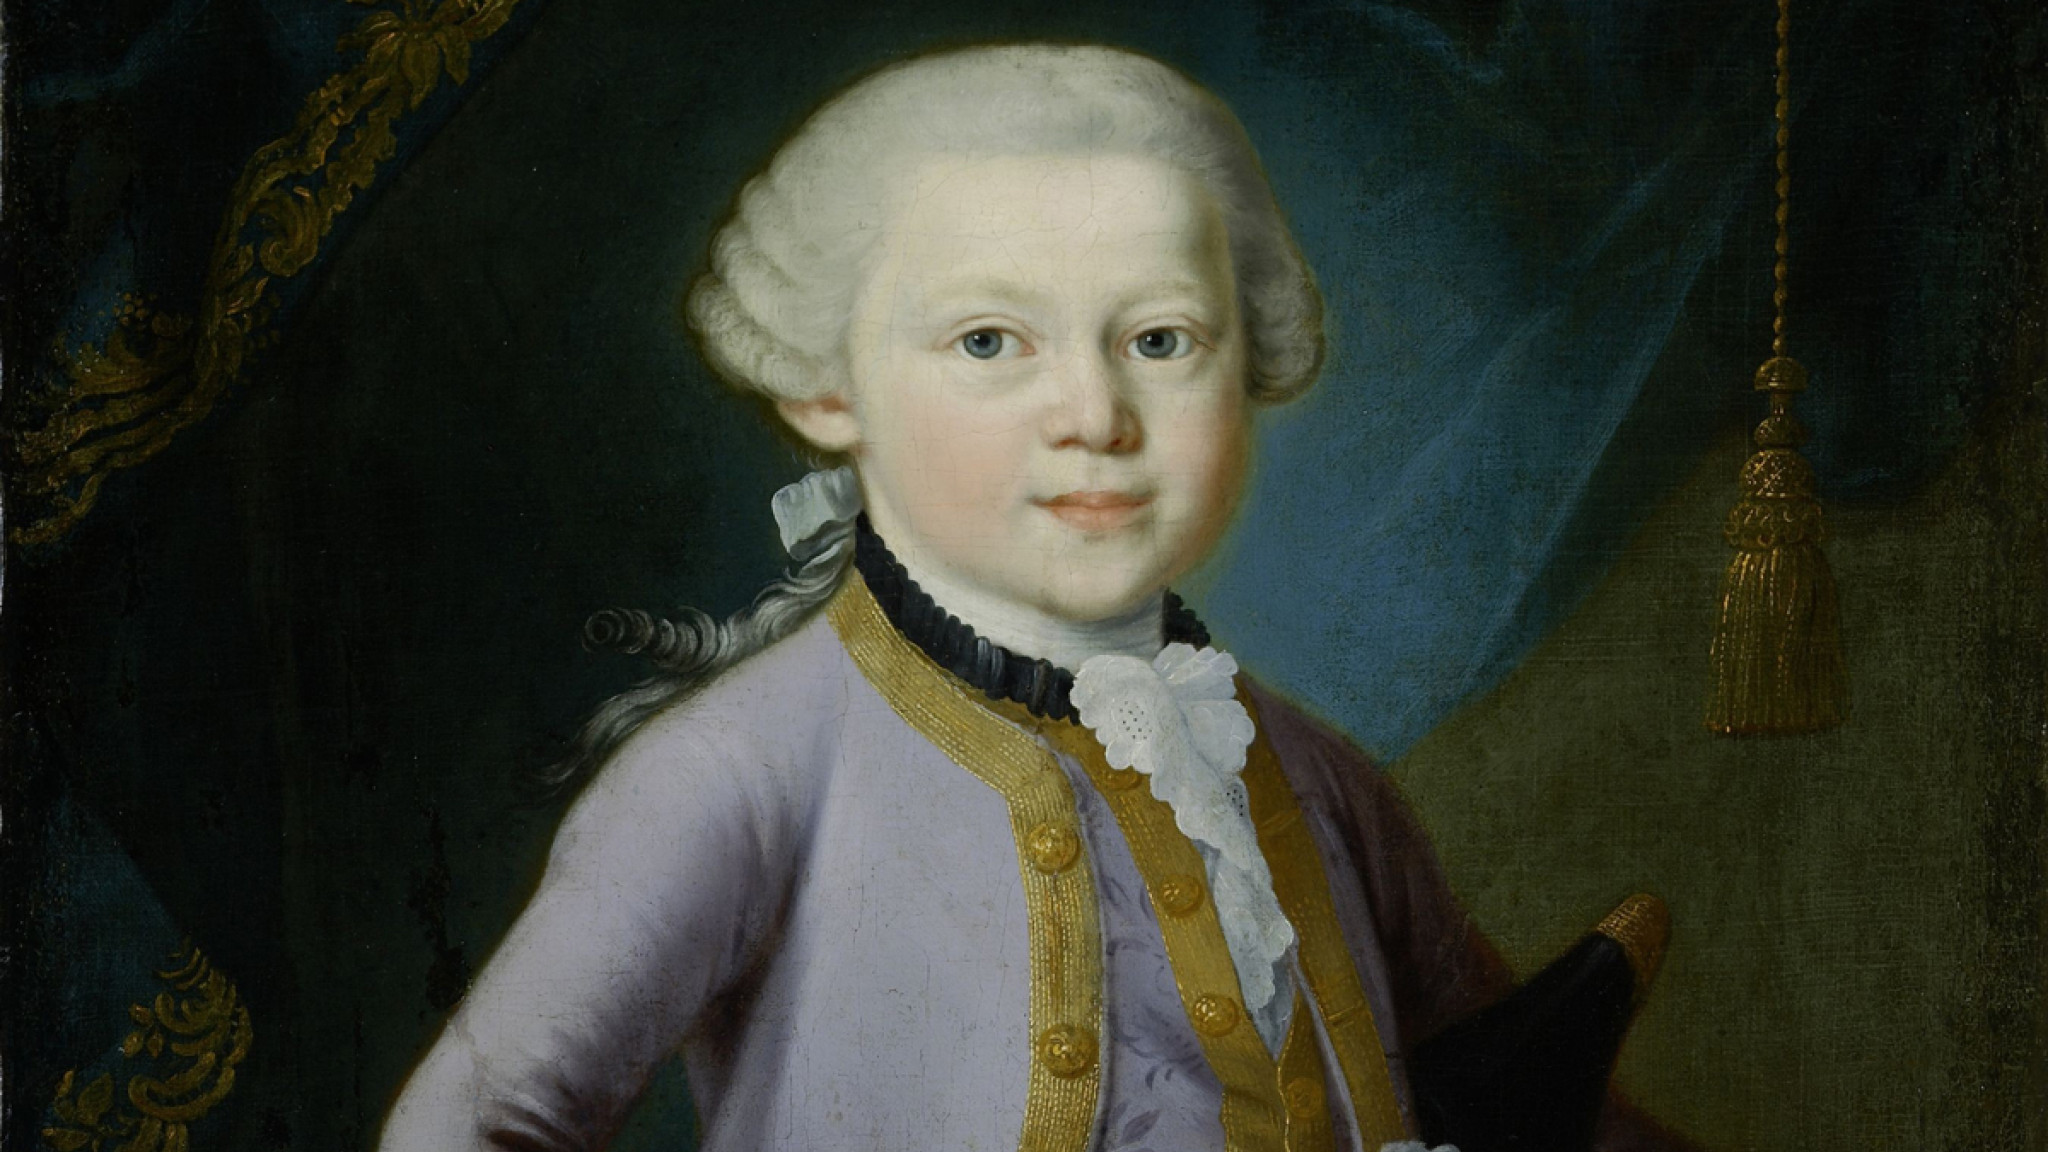 Mensch, Mozart! - 10 Fakten über Wolfgang Amadeus Mozart - Teil 2/6